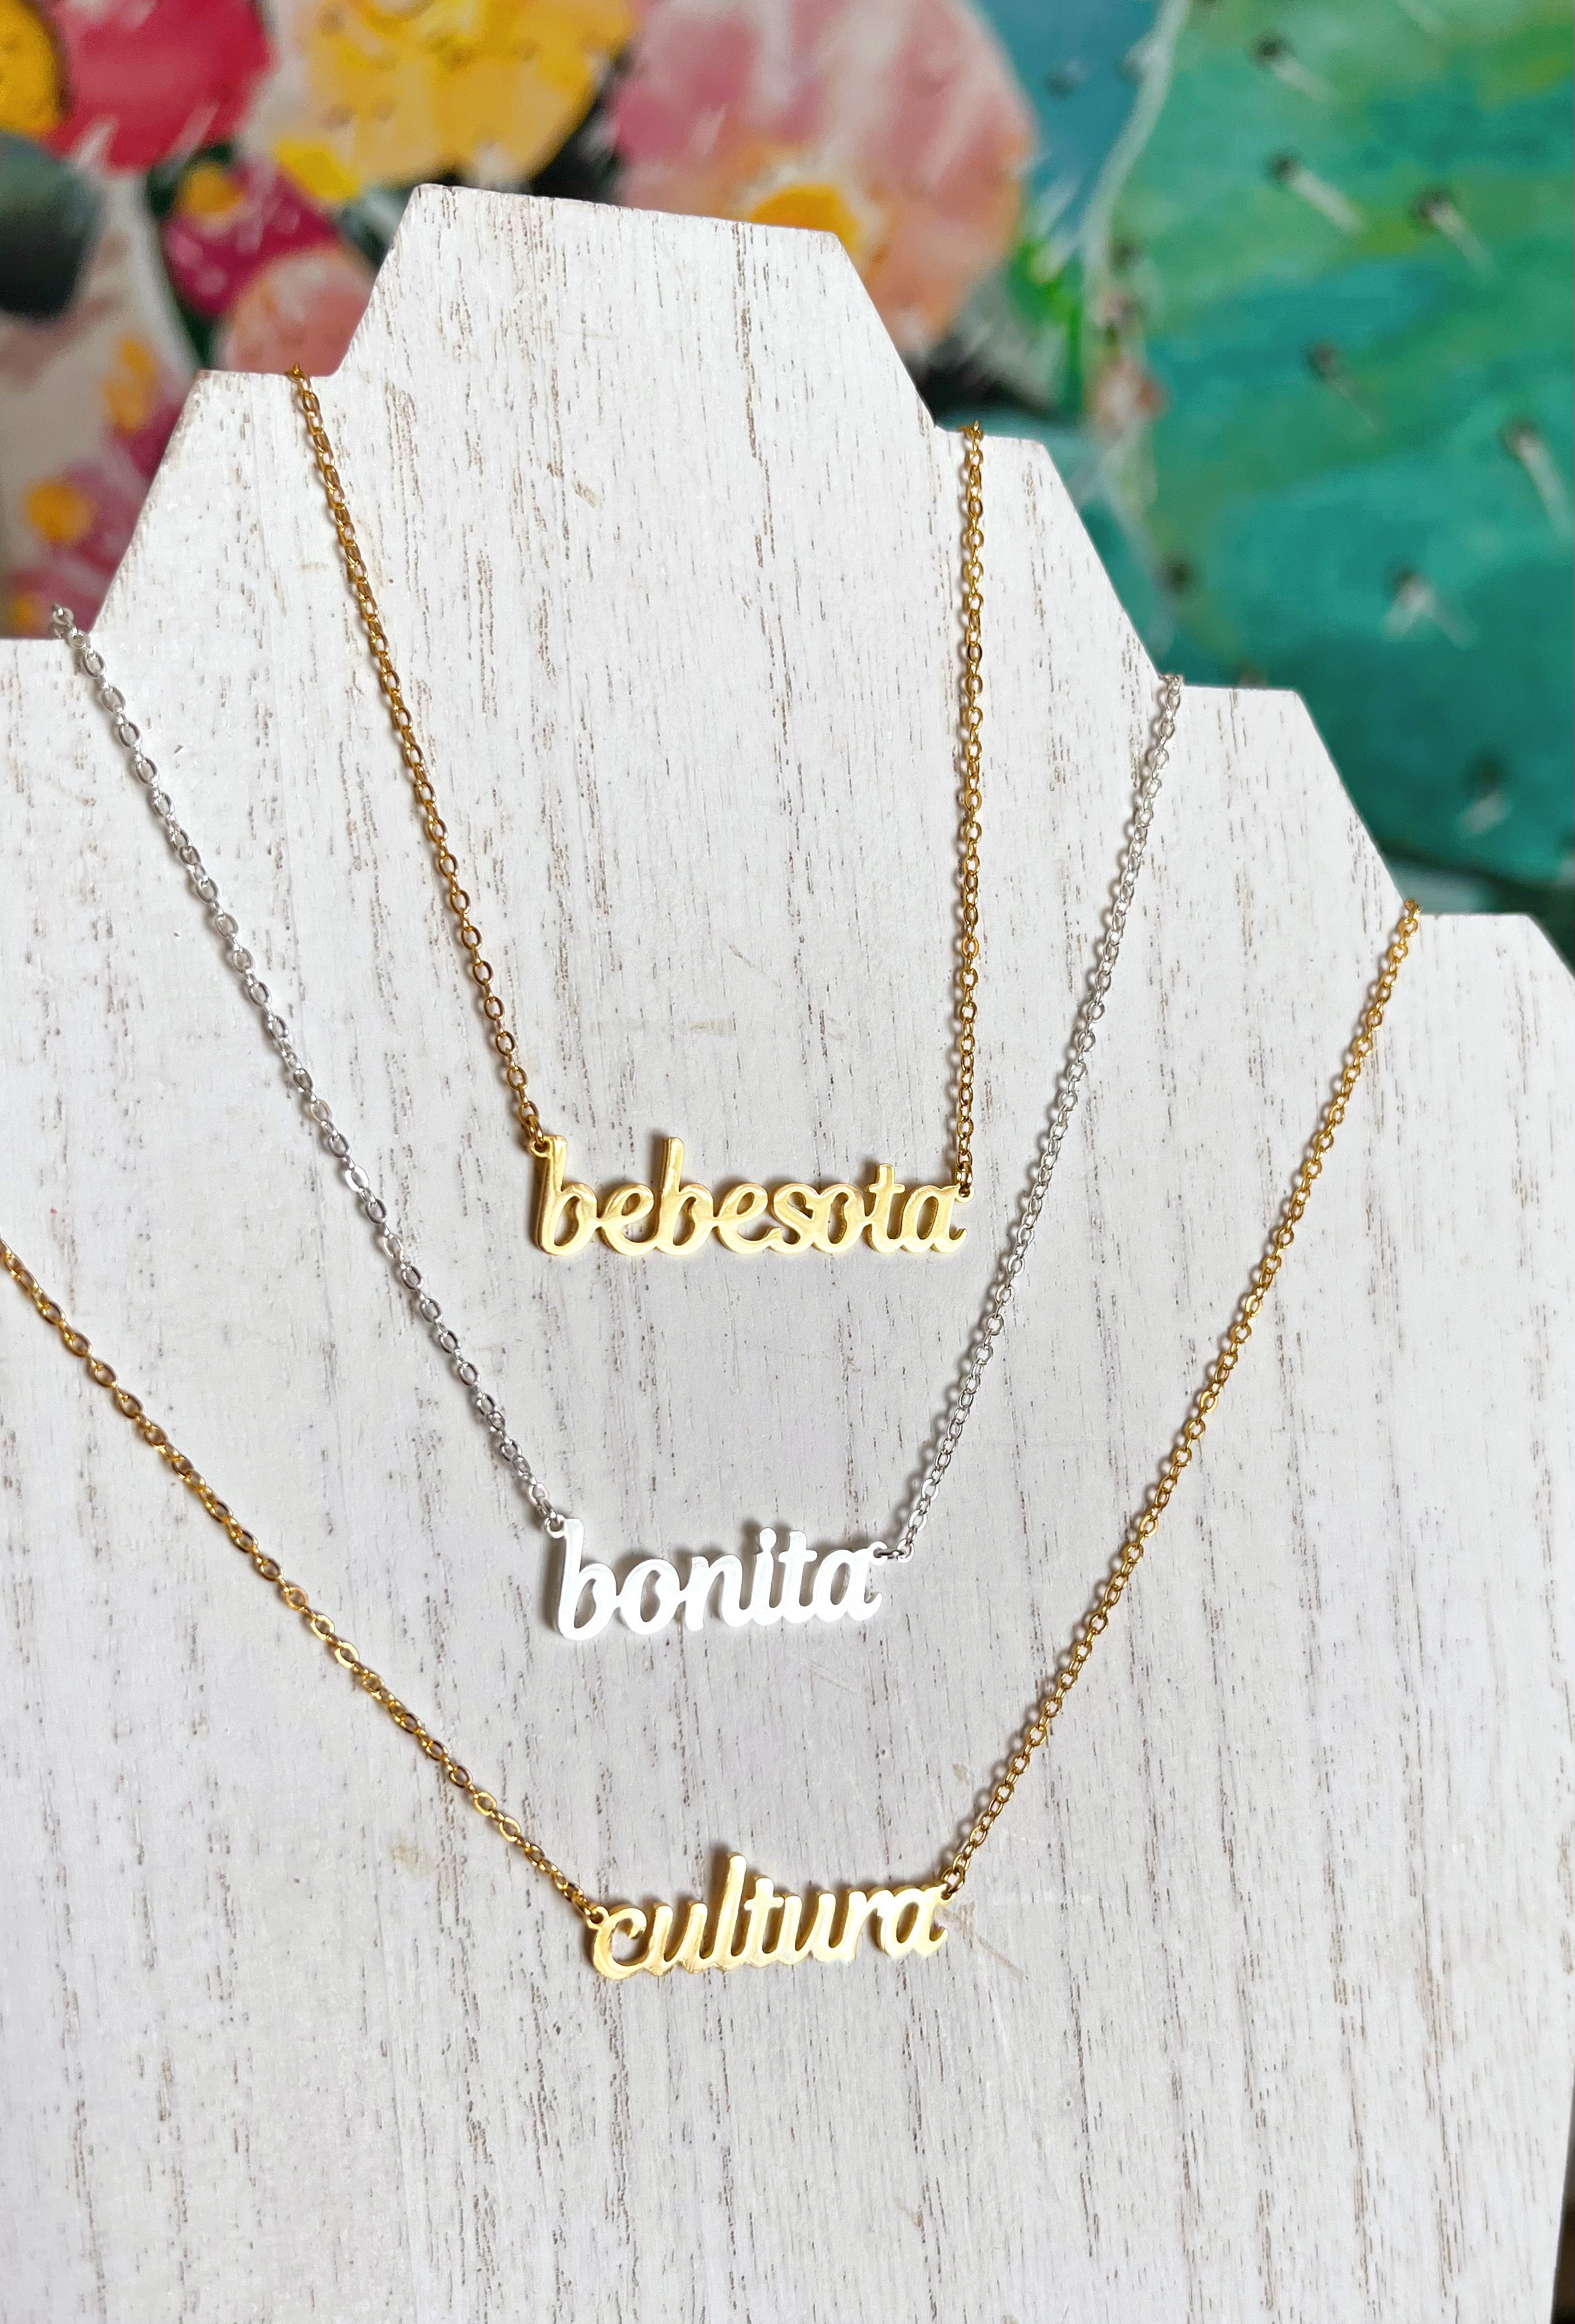 Bebesota, Bonita, or Cultura Name Necklace